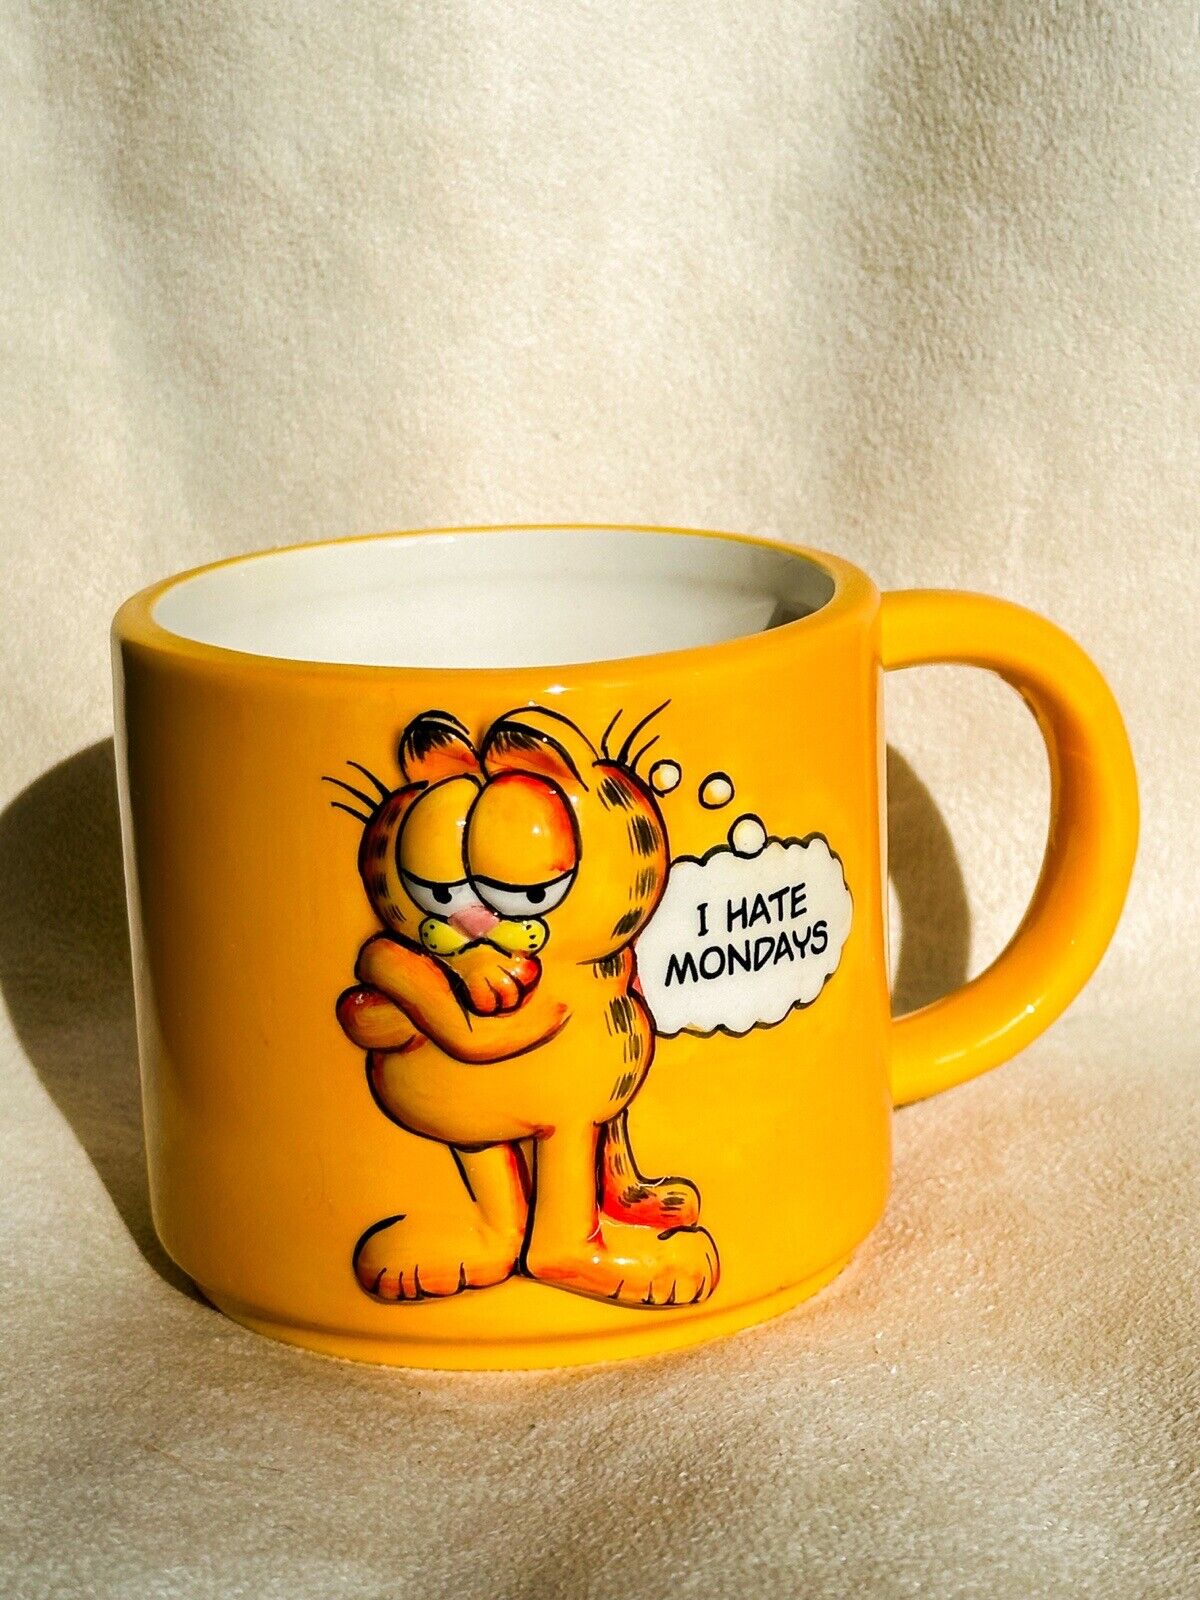 Garfield Inspired Ceramic Orange Coffee Mug Cup Raised 3D “I Hate Mondays” Comic